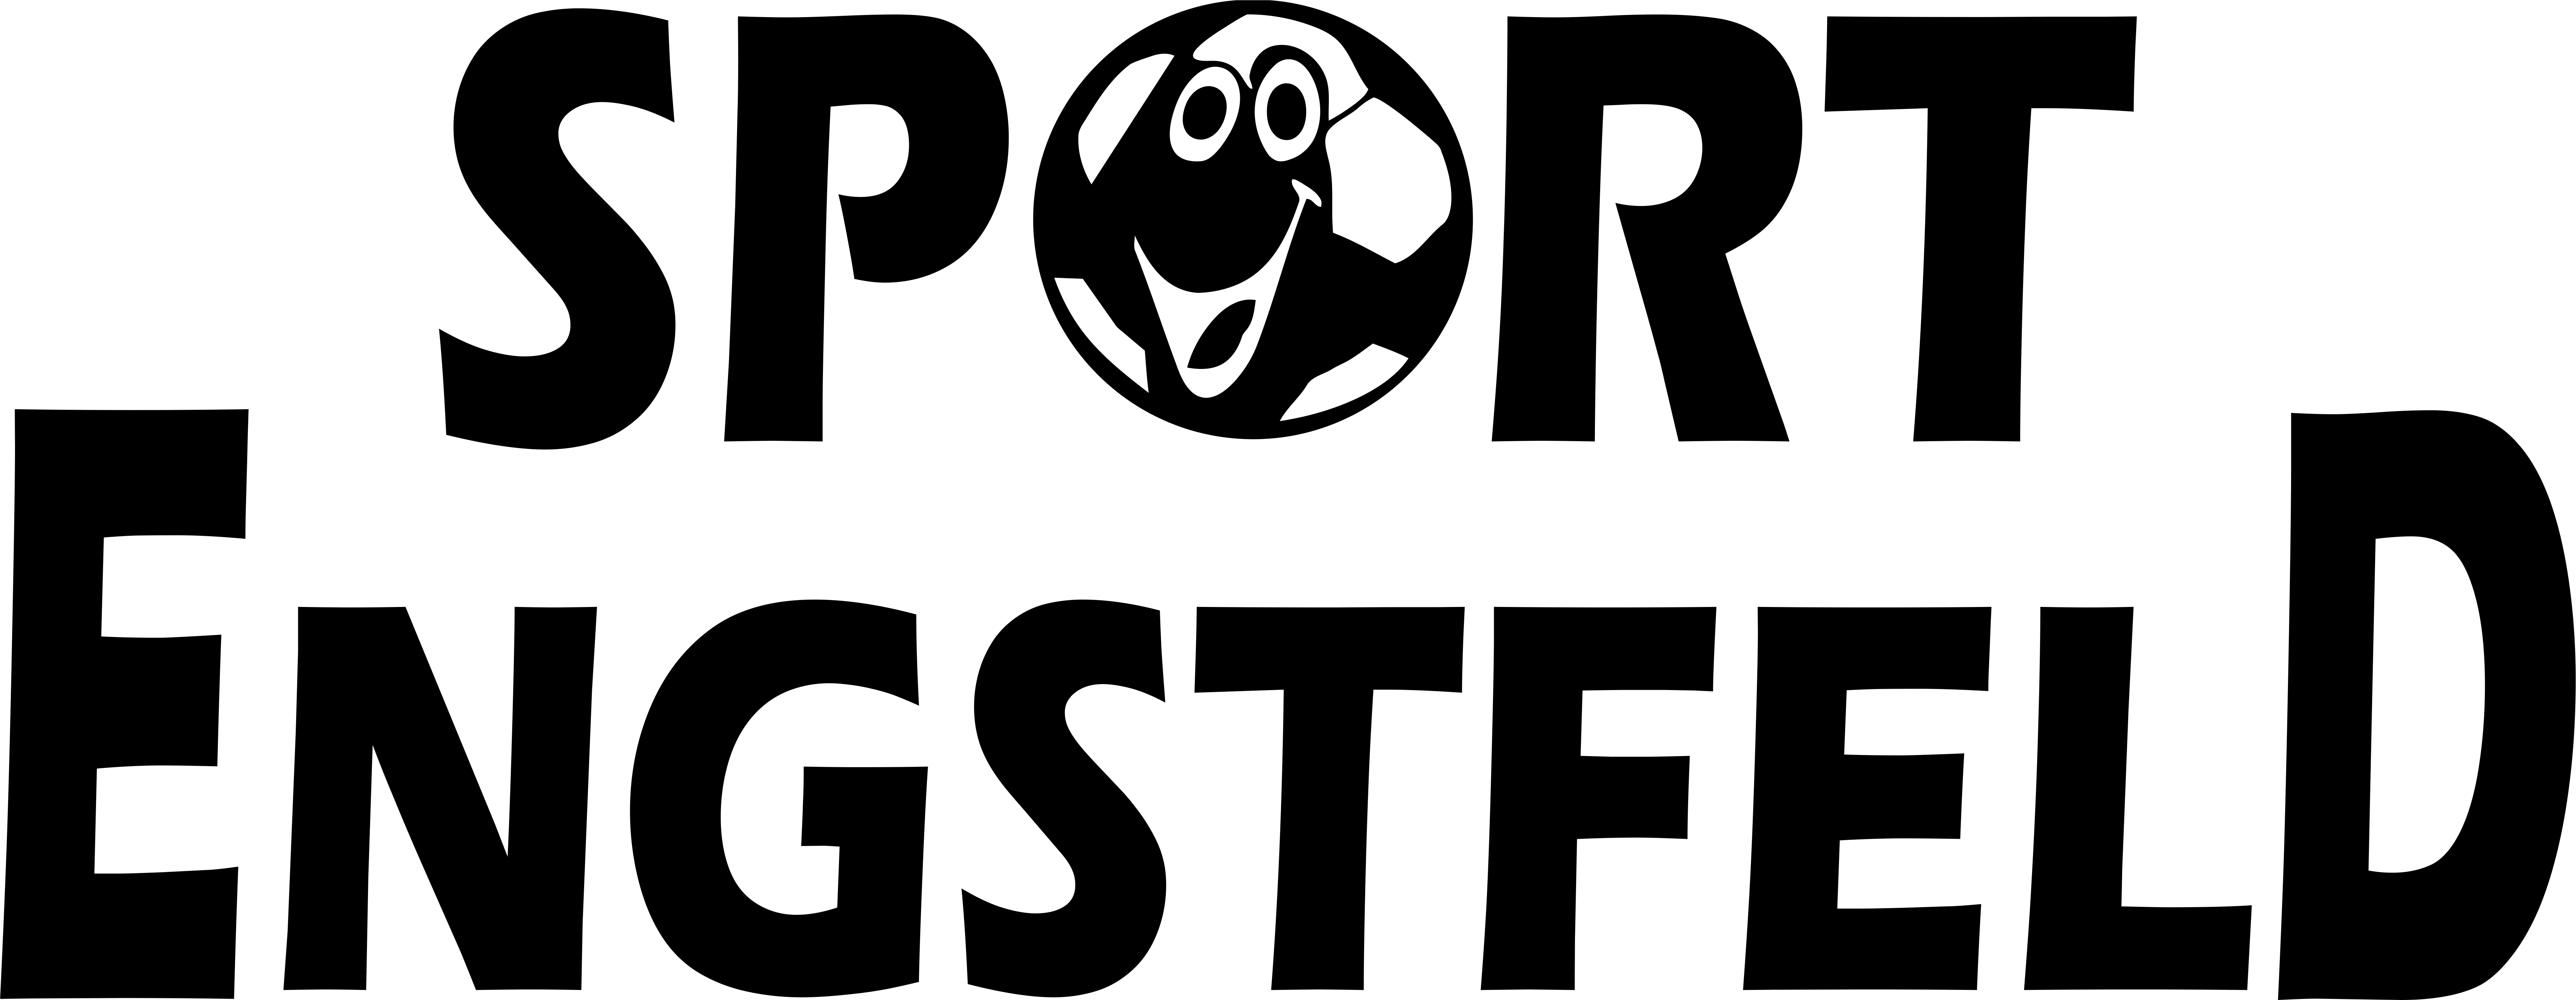 TV Rosenthal 1899 Logo2